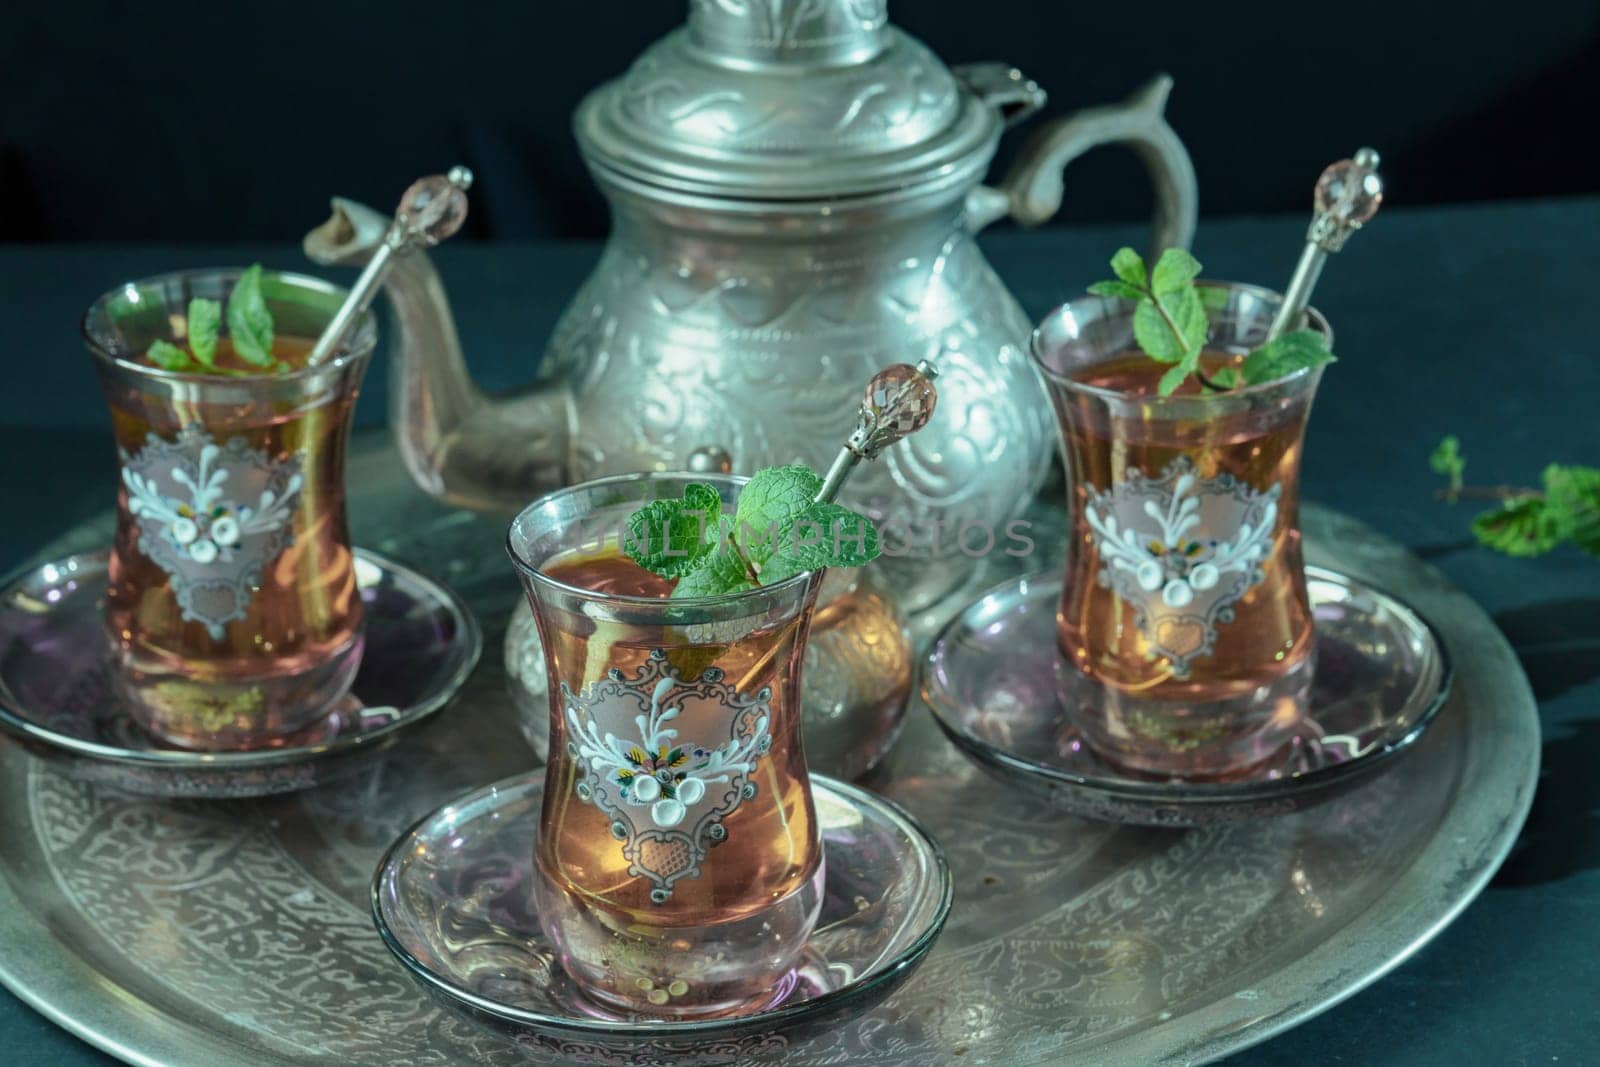 traditional Moorish mint tea service on a tray with decorated glass by joseantona